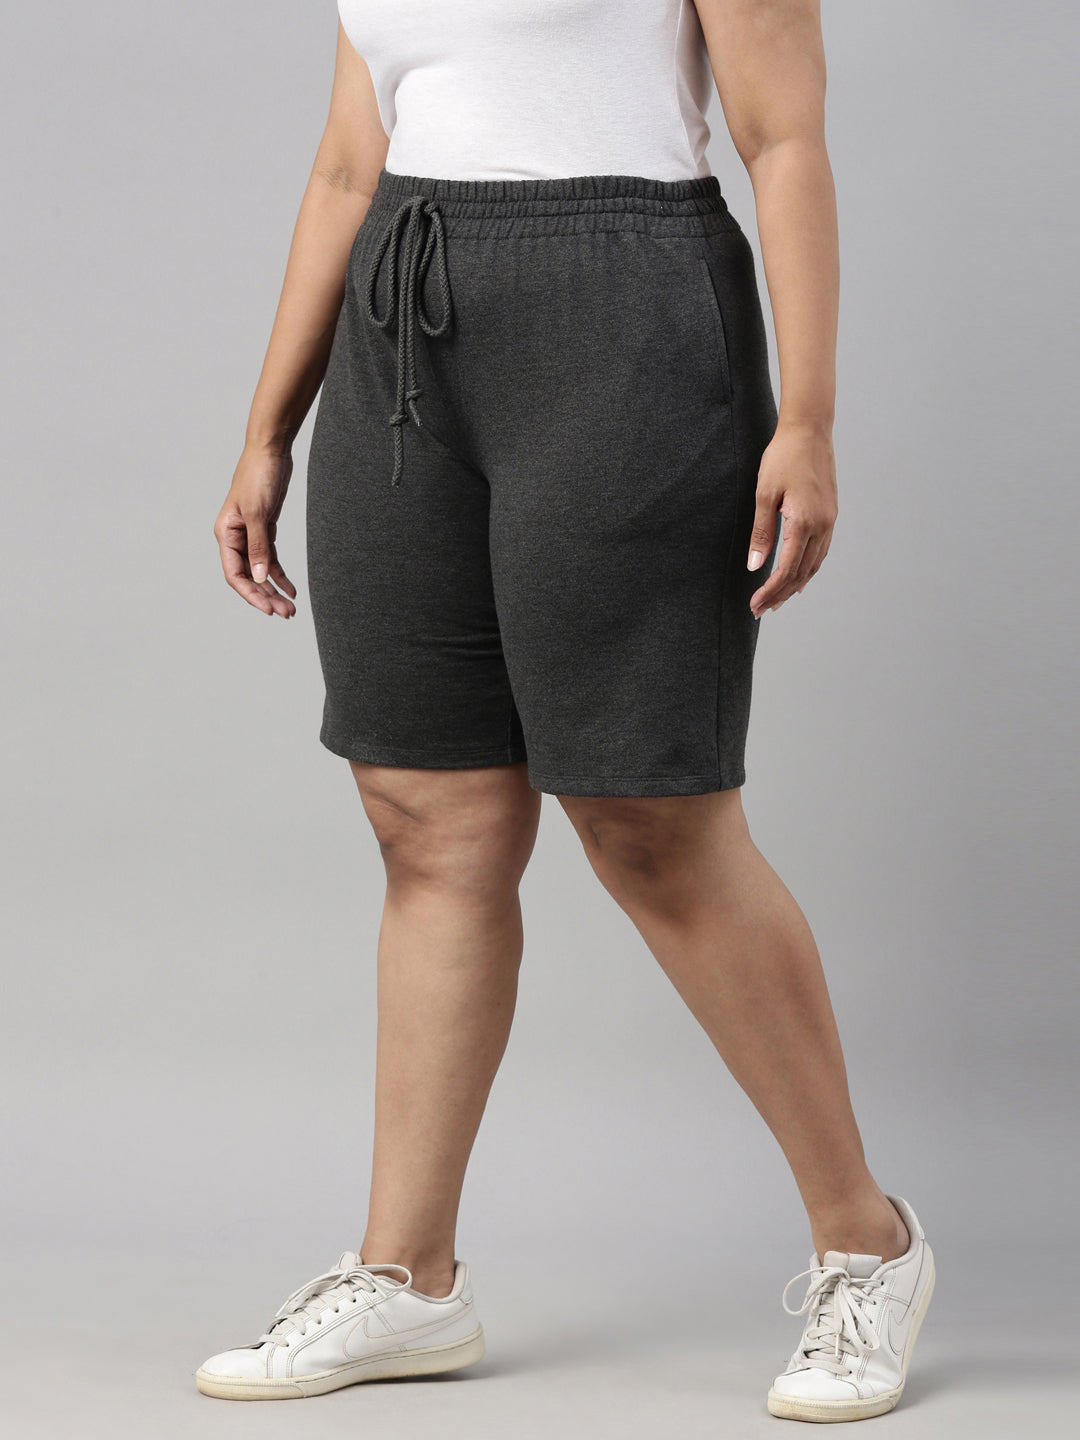 Knee Length Cotton Shorts - Charcoal Grey